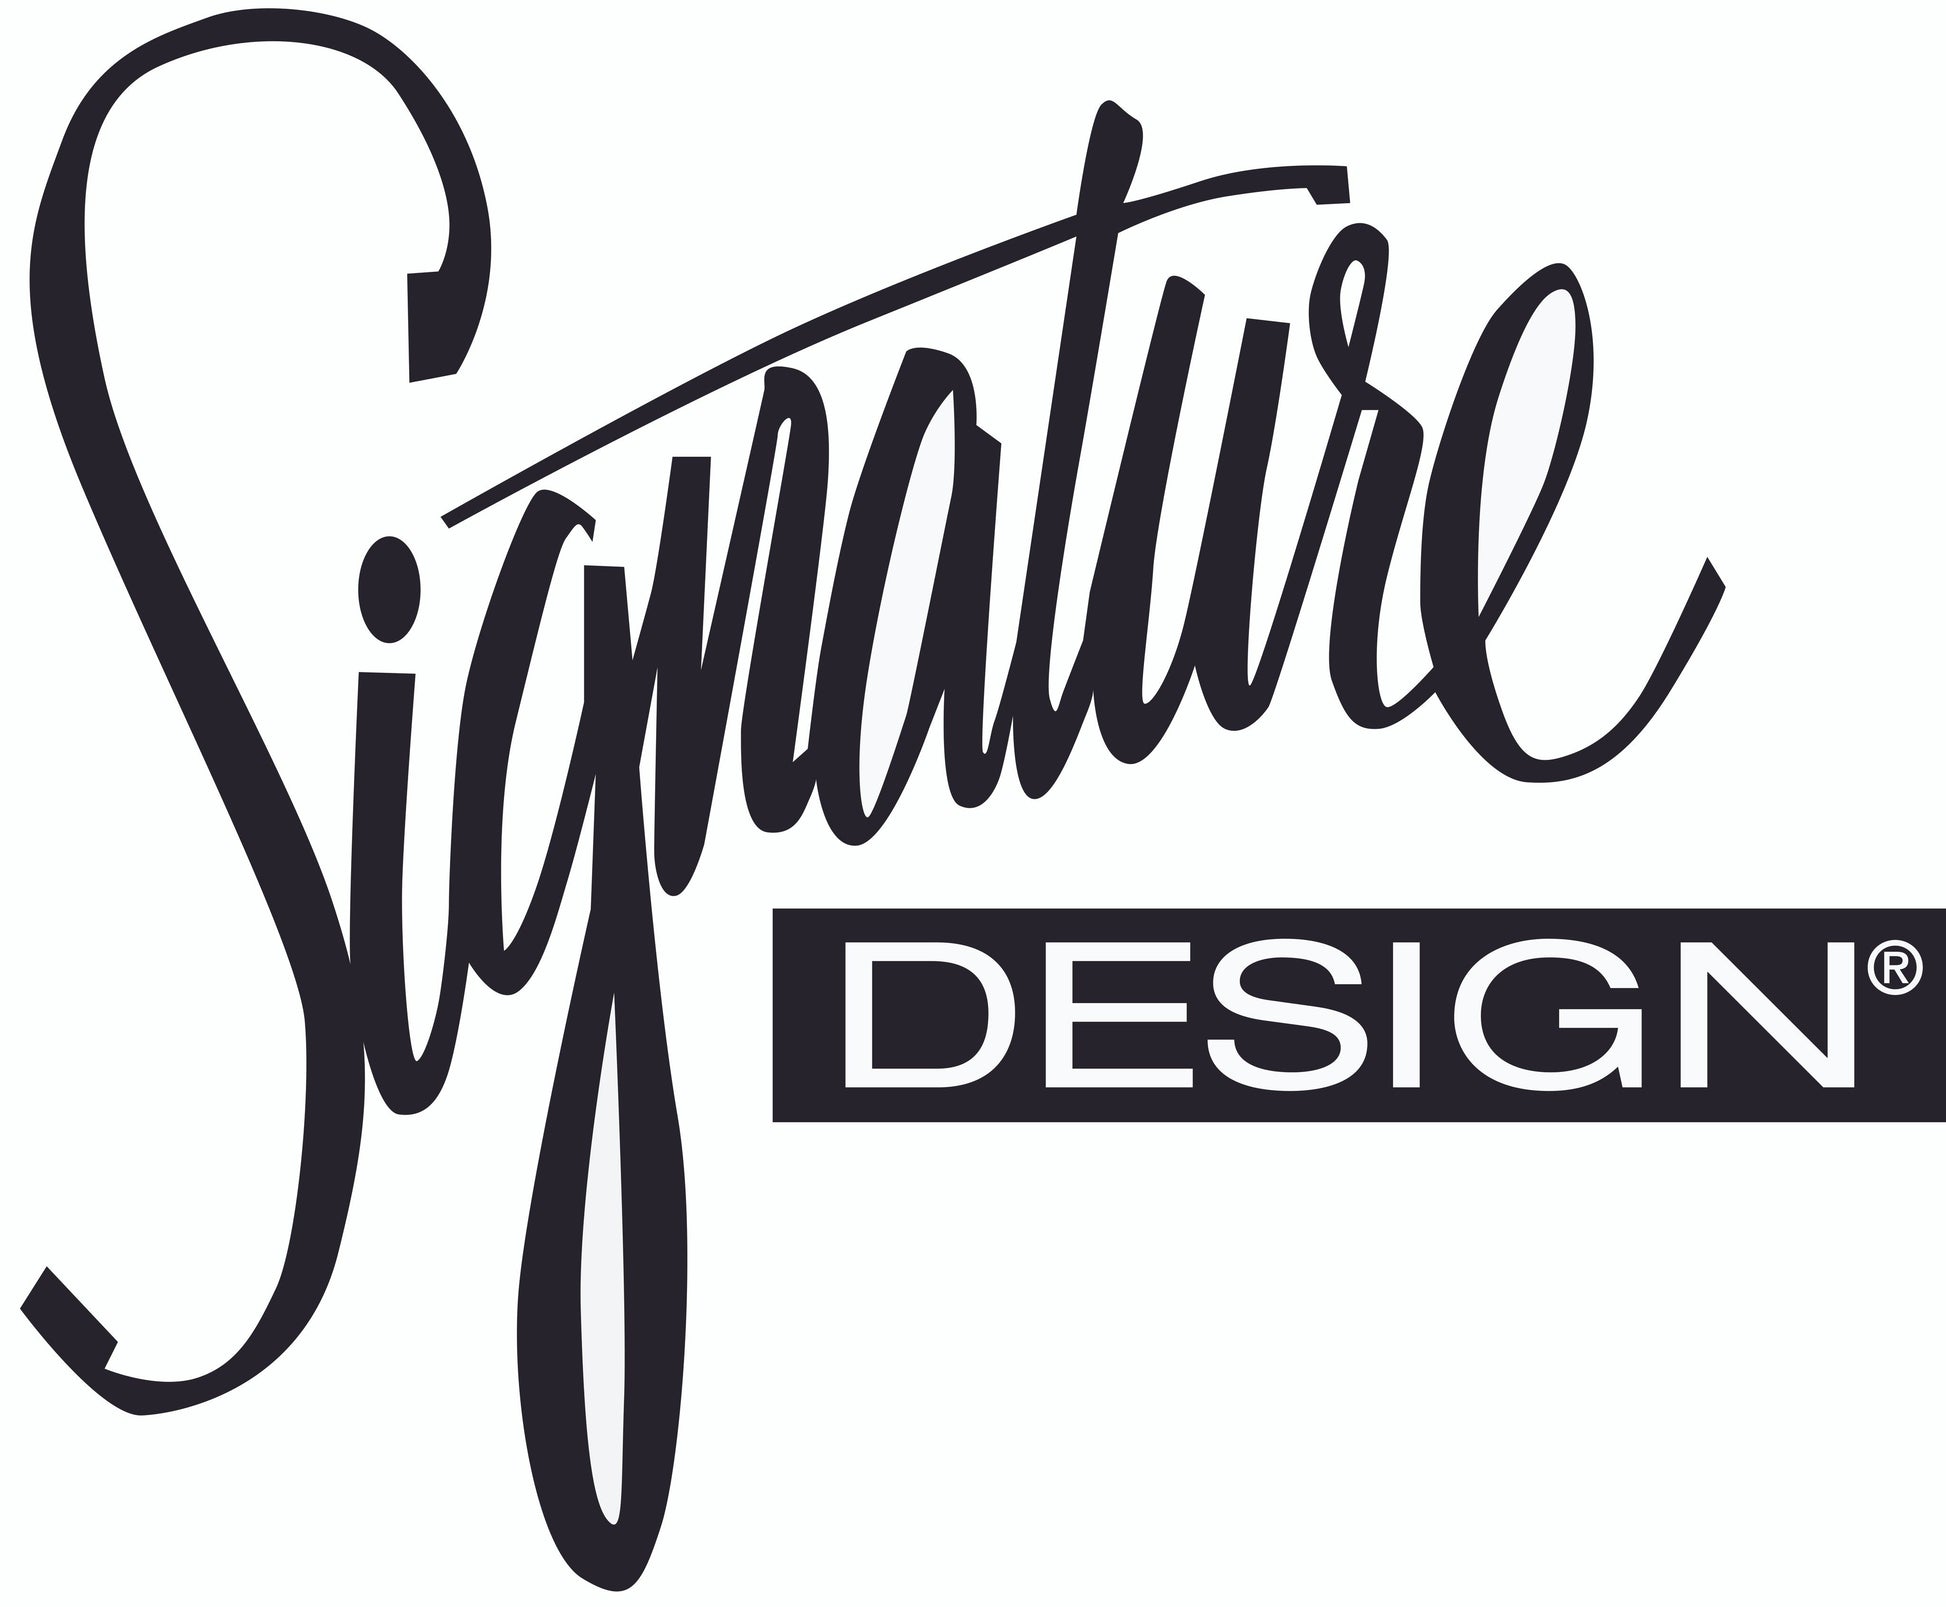 Senniberg Six Drawer Dresser Signature Design by Ashley®